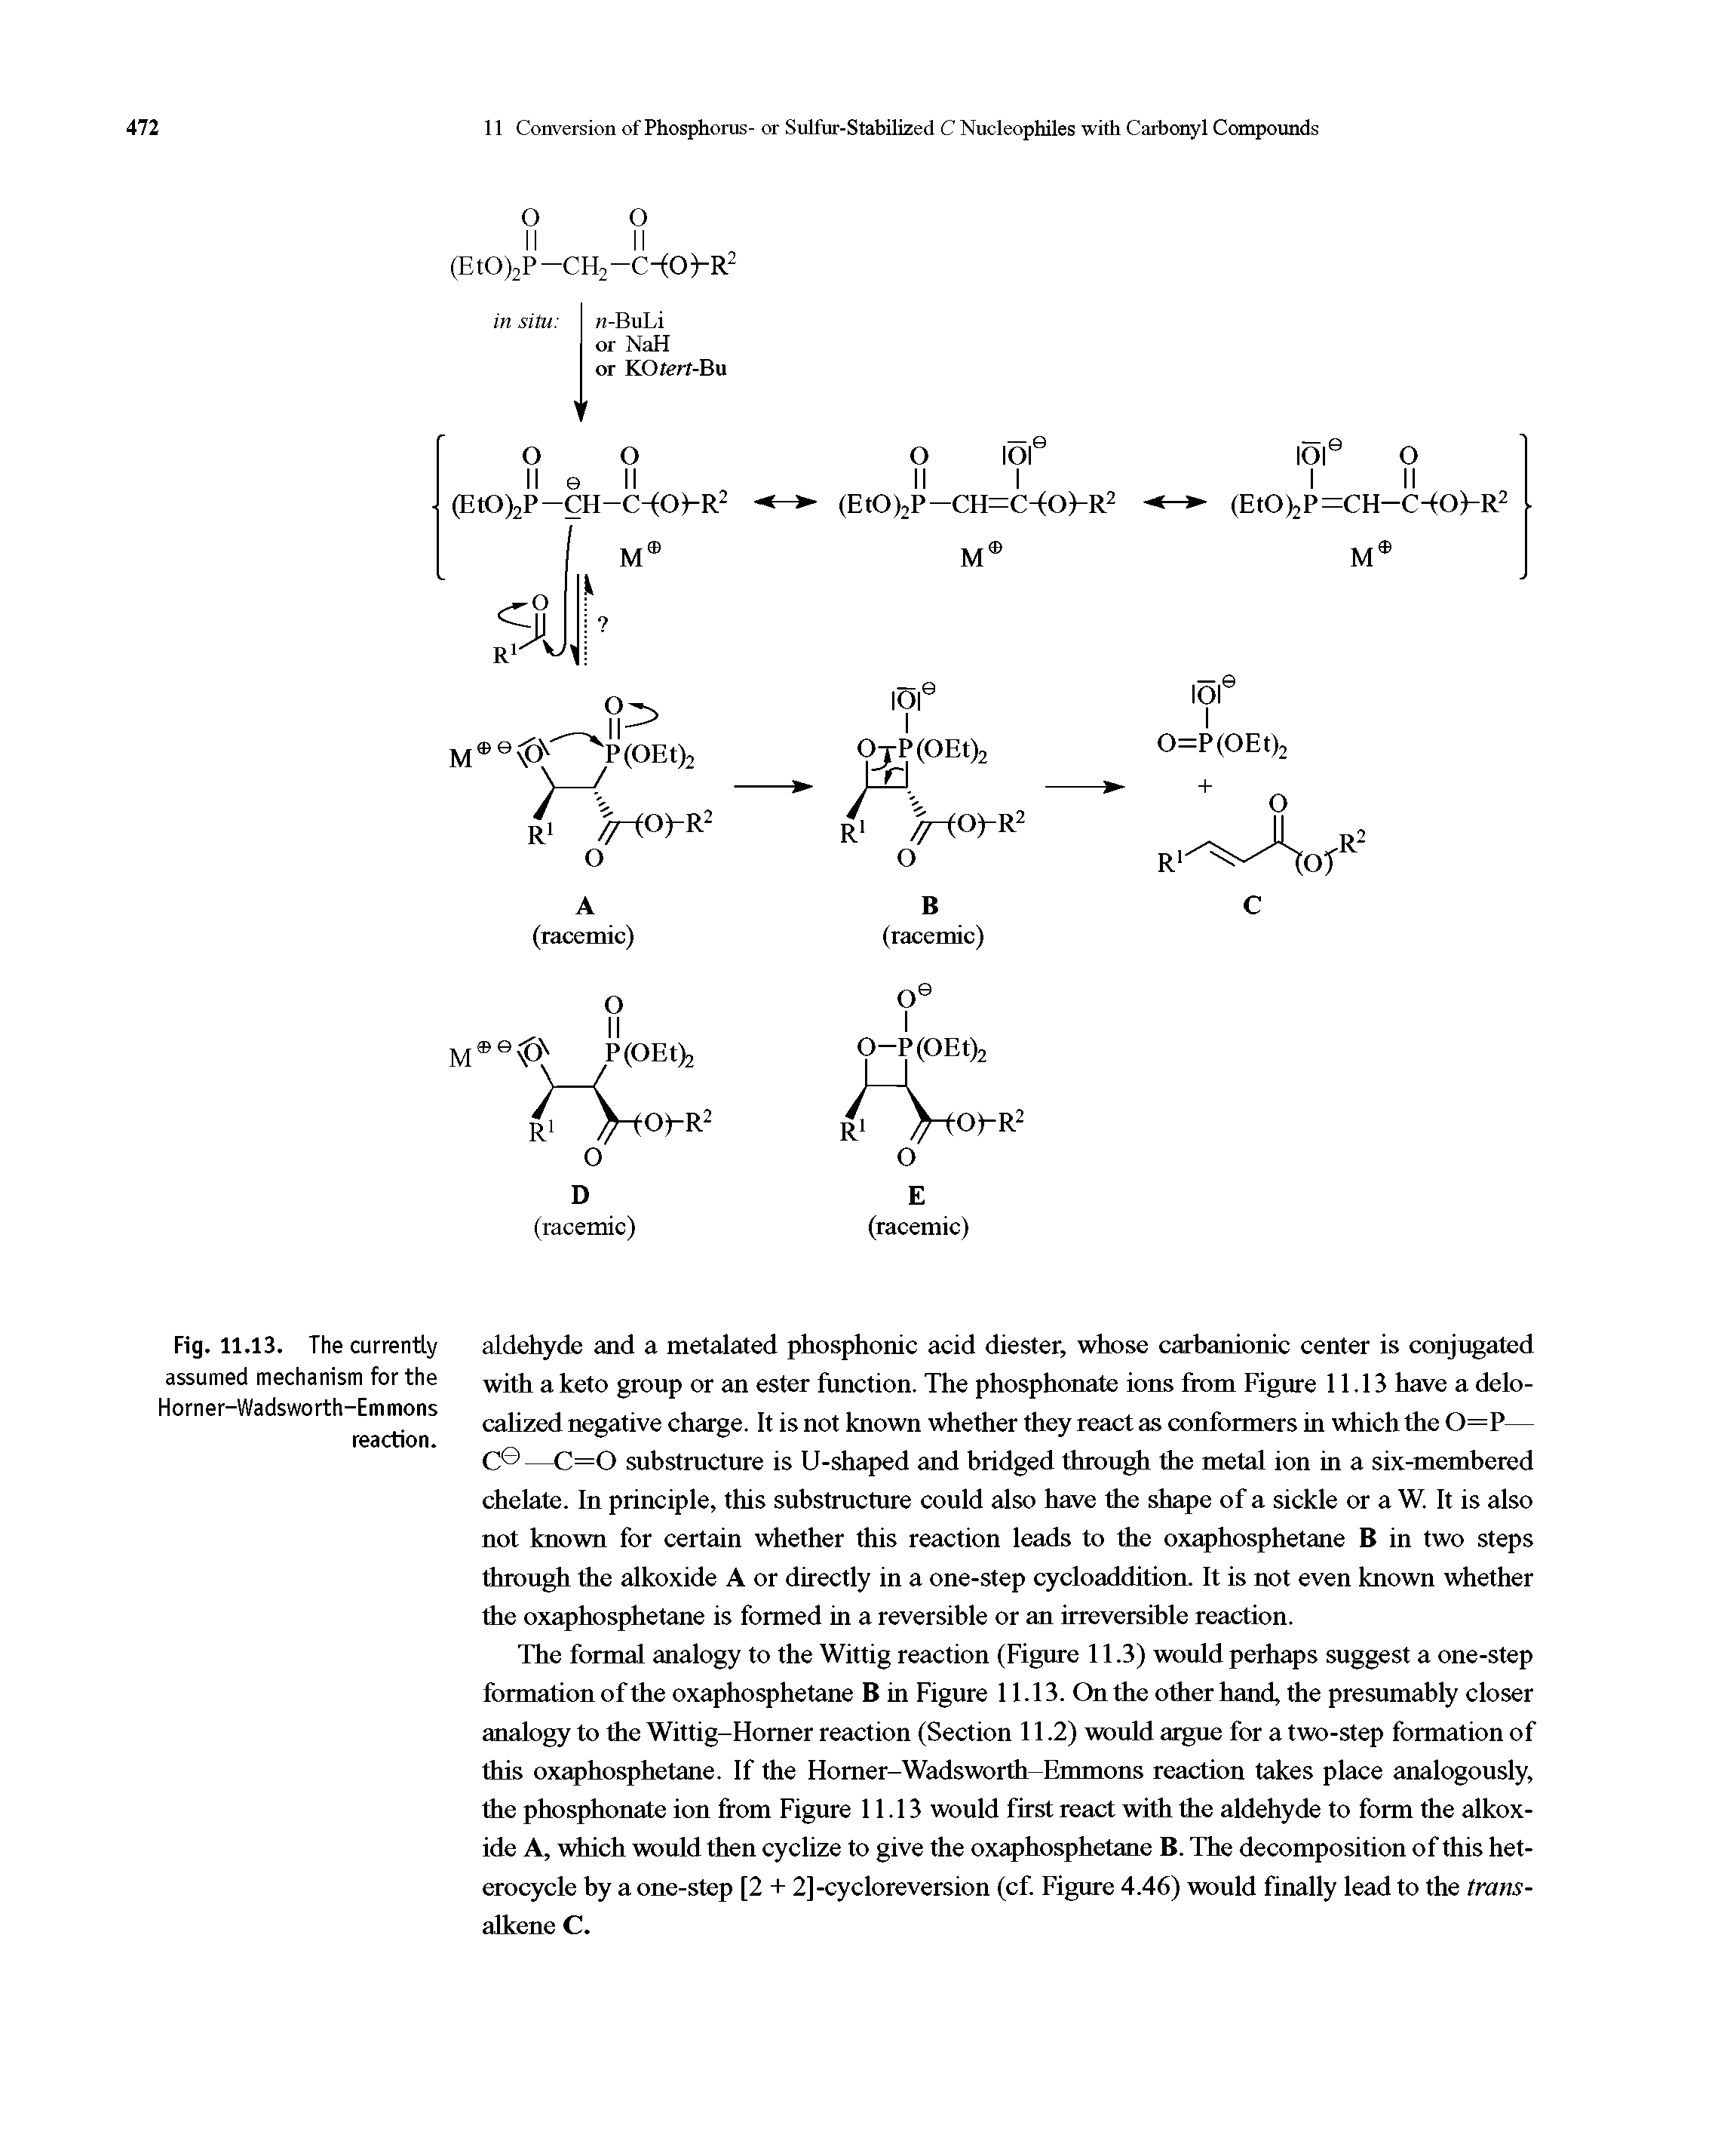 Fig. 11.13. The currently assumed mechanism for the Horner-Wadsworth-Emmons reaction.